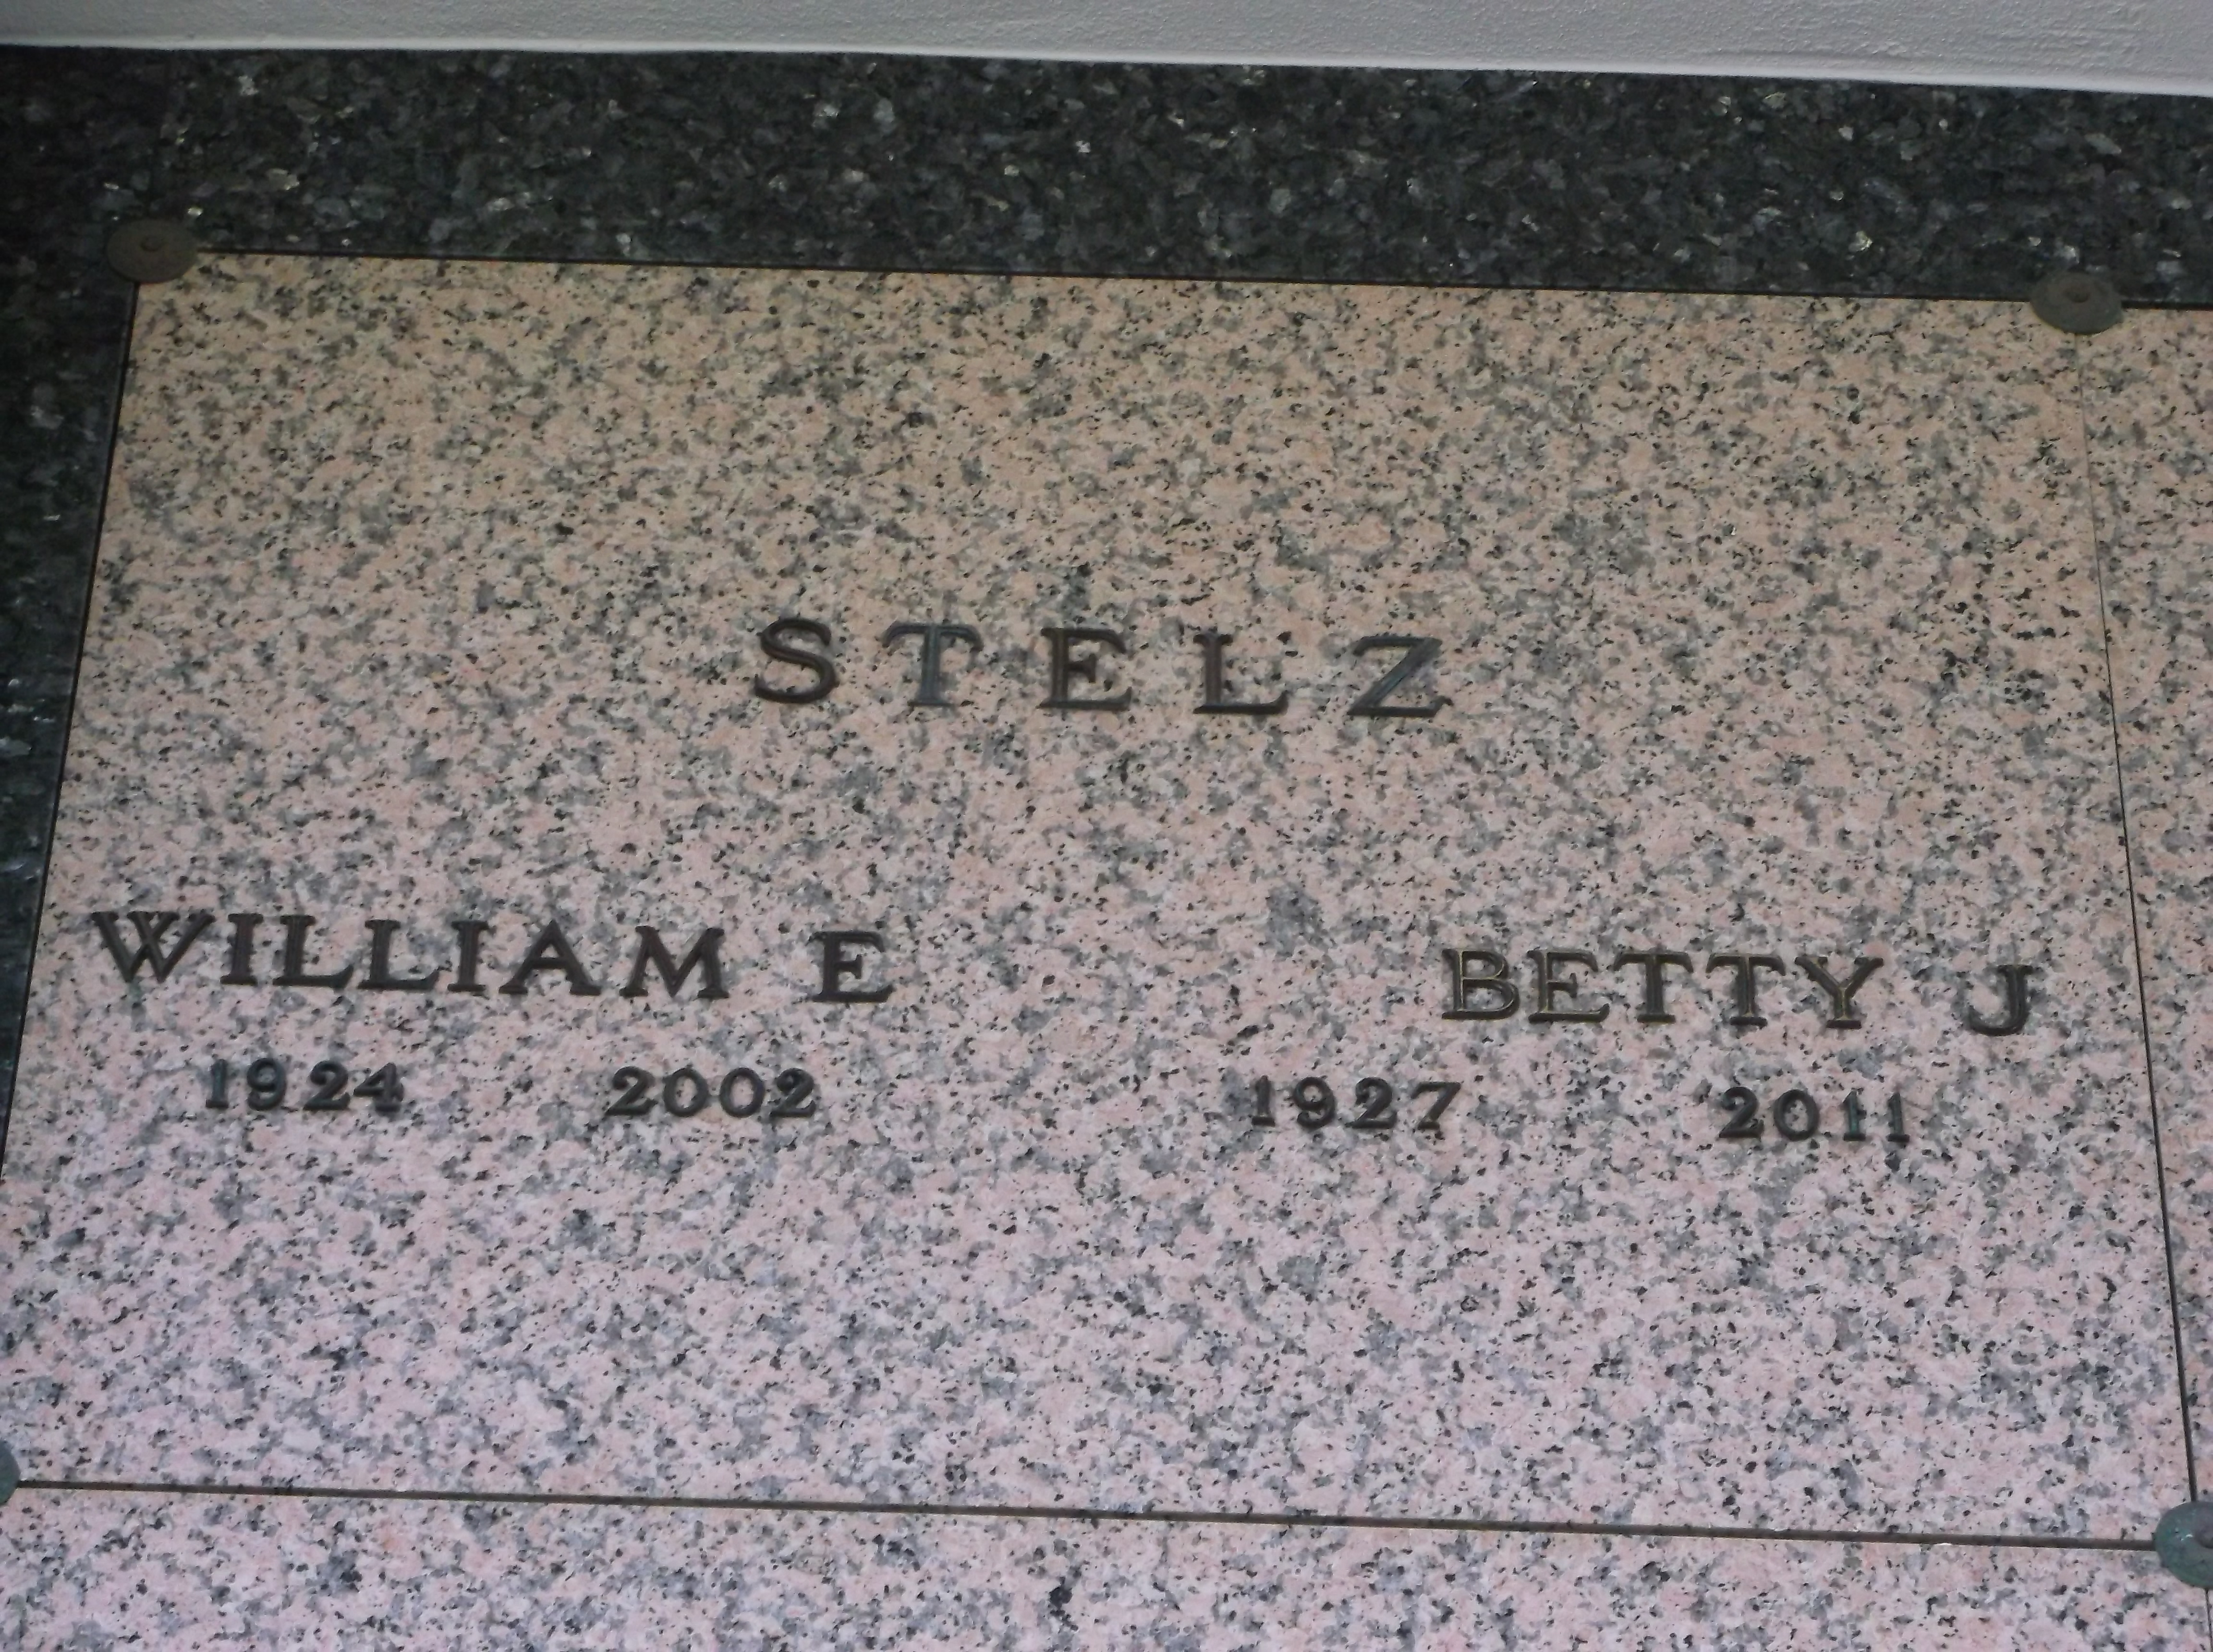 Betty J Stelz